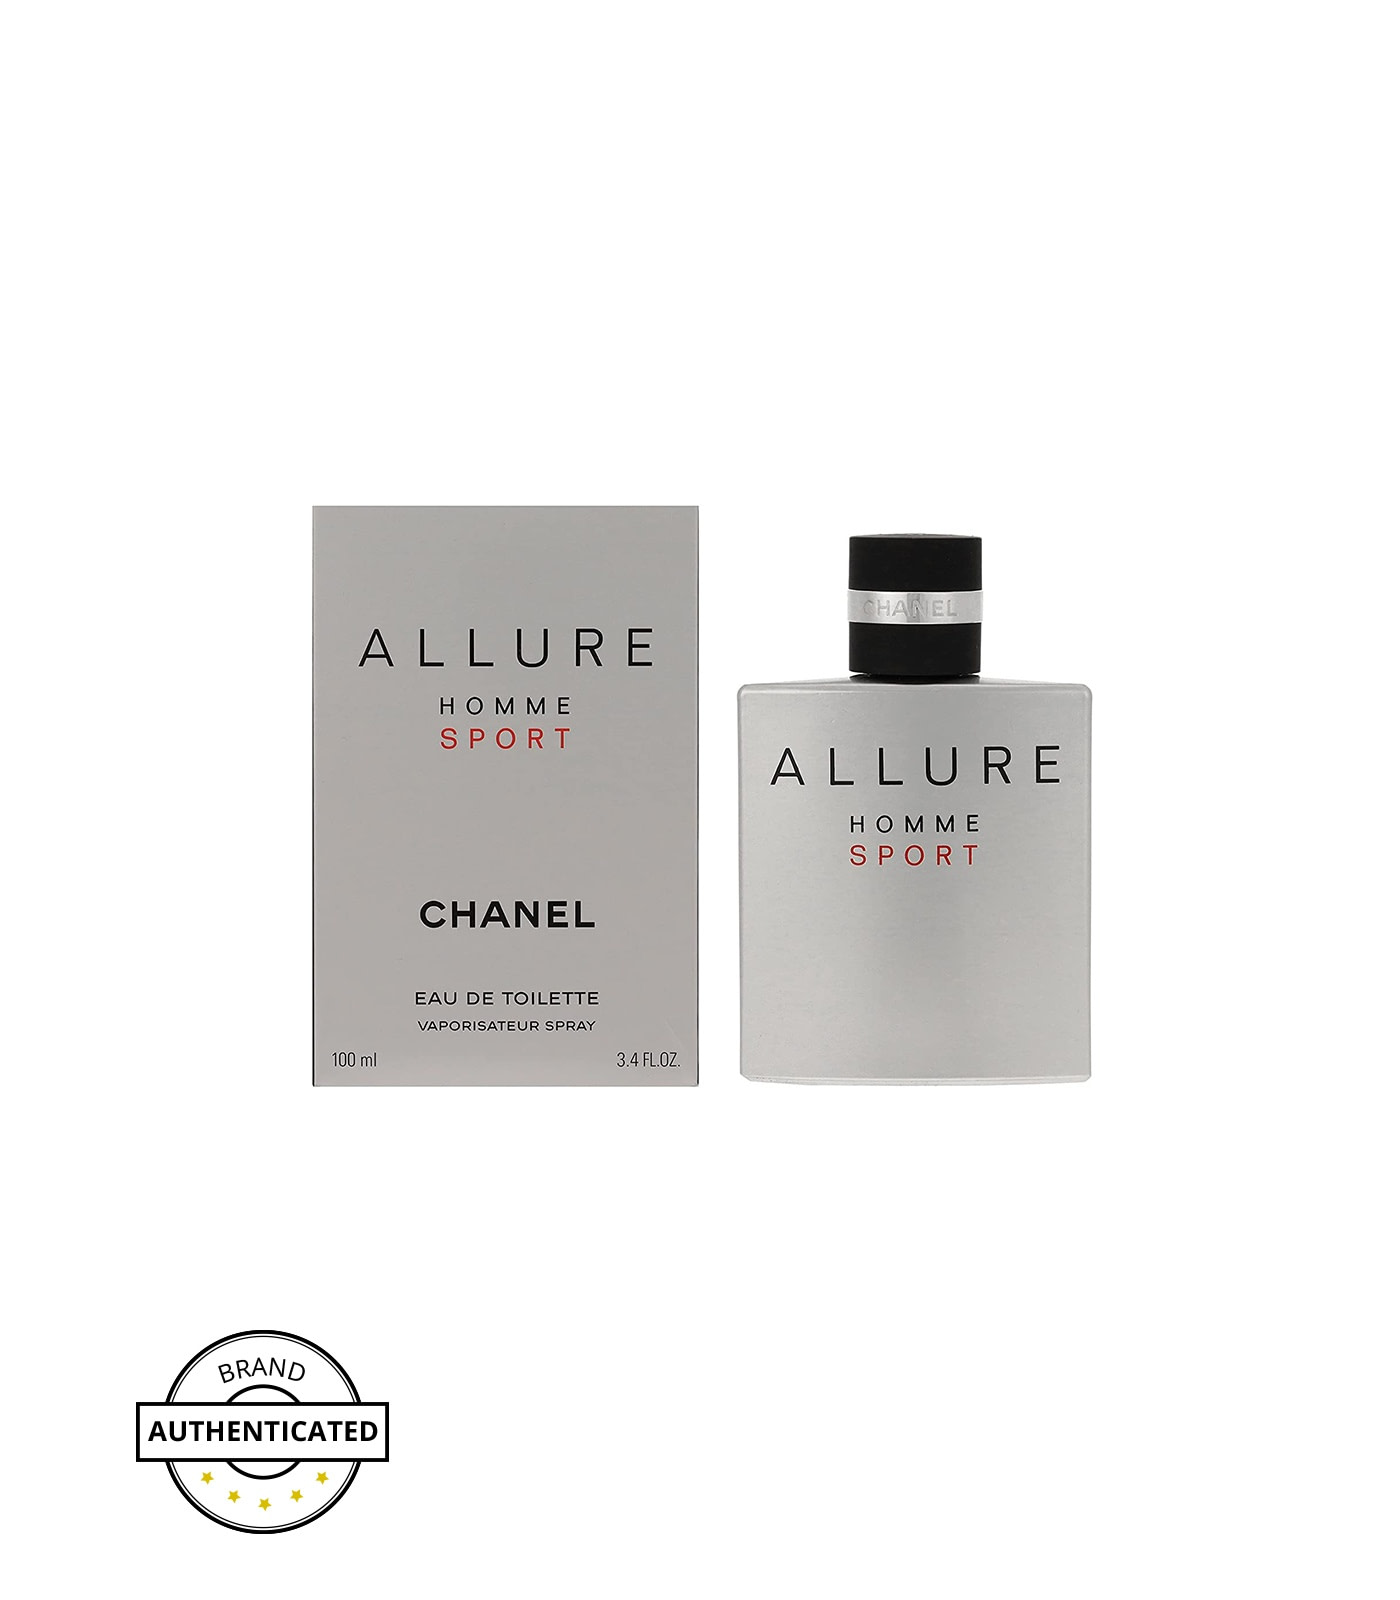 Allure homme chanel для мужчин. Chanel Allure homme Sport. Chanel Allure homme Sport мужские. Шанель духи мужские Allure. Chanel Allure homme Sport 100ml.